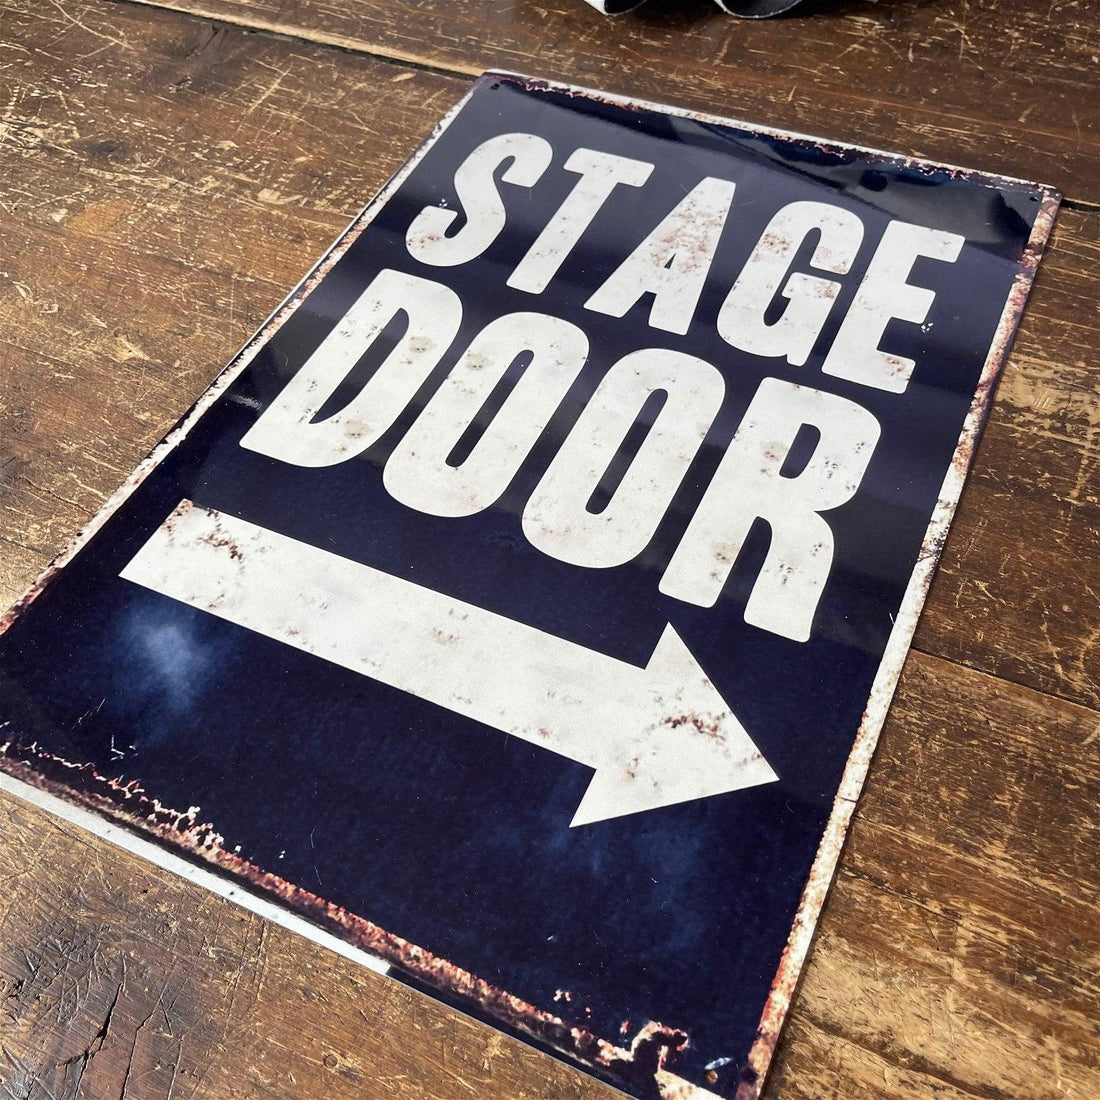 Vintage Metal Sign - Stage Door Metal Wall Sign - £27.99 - Signs & Rules 